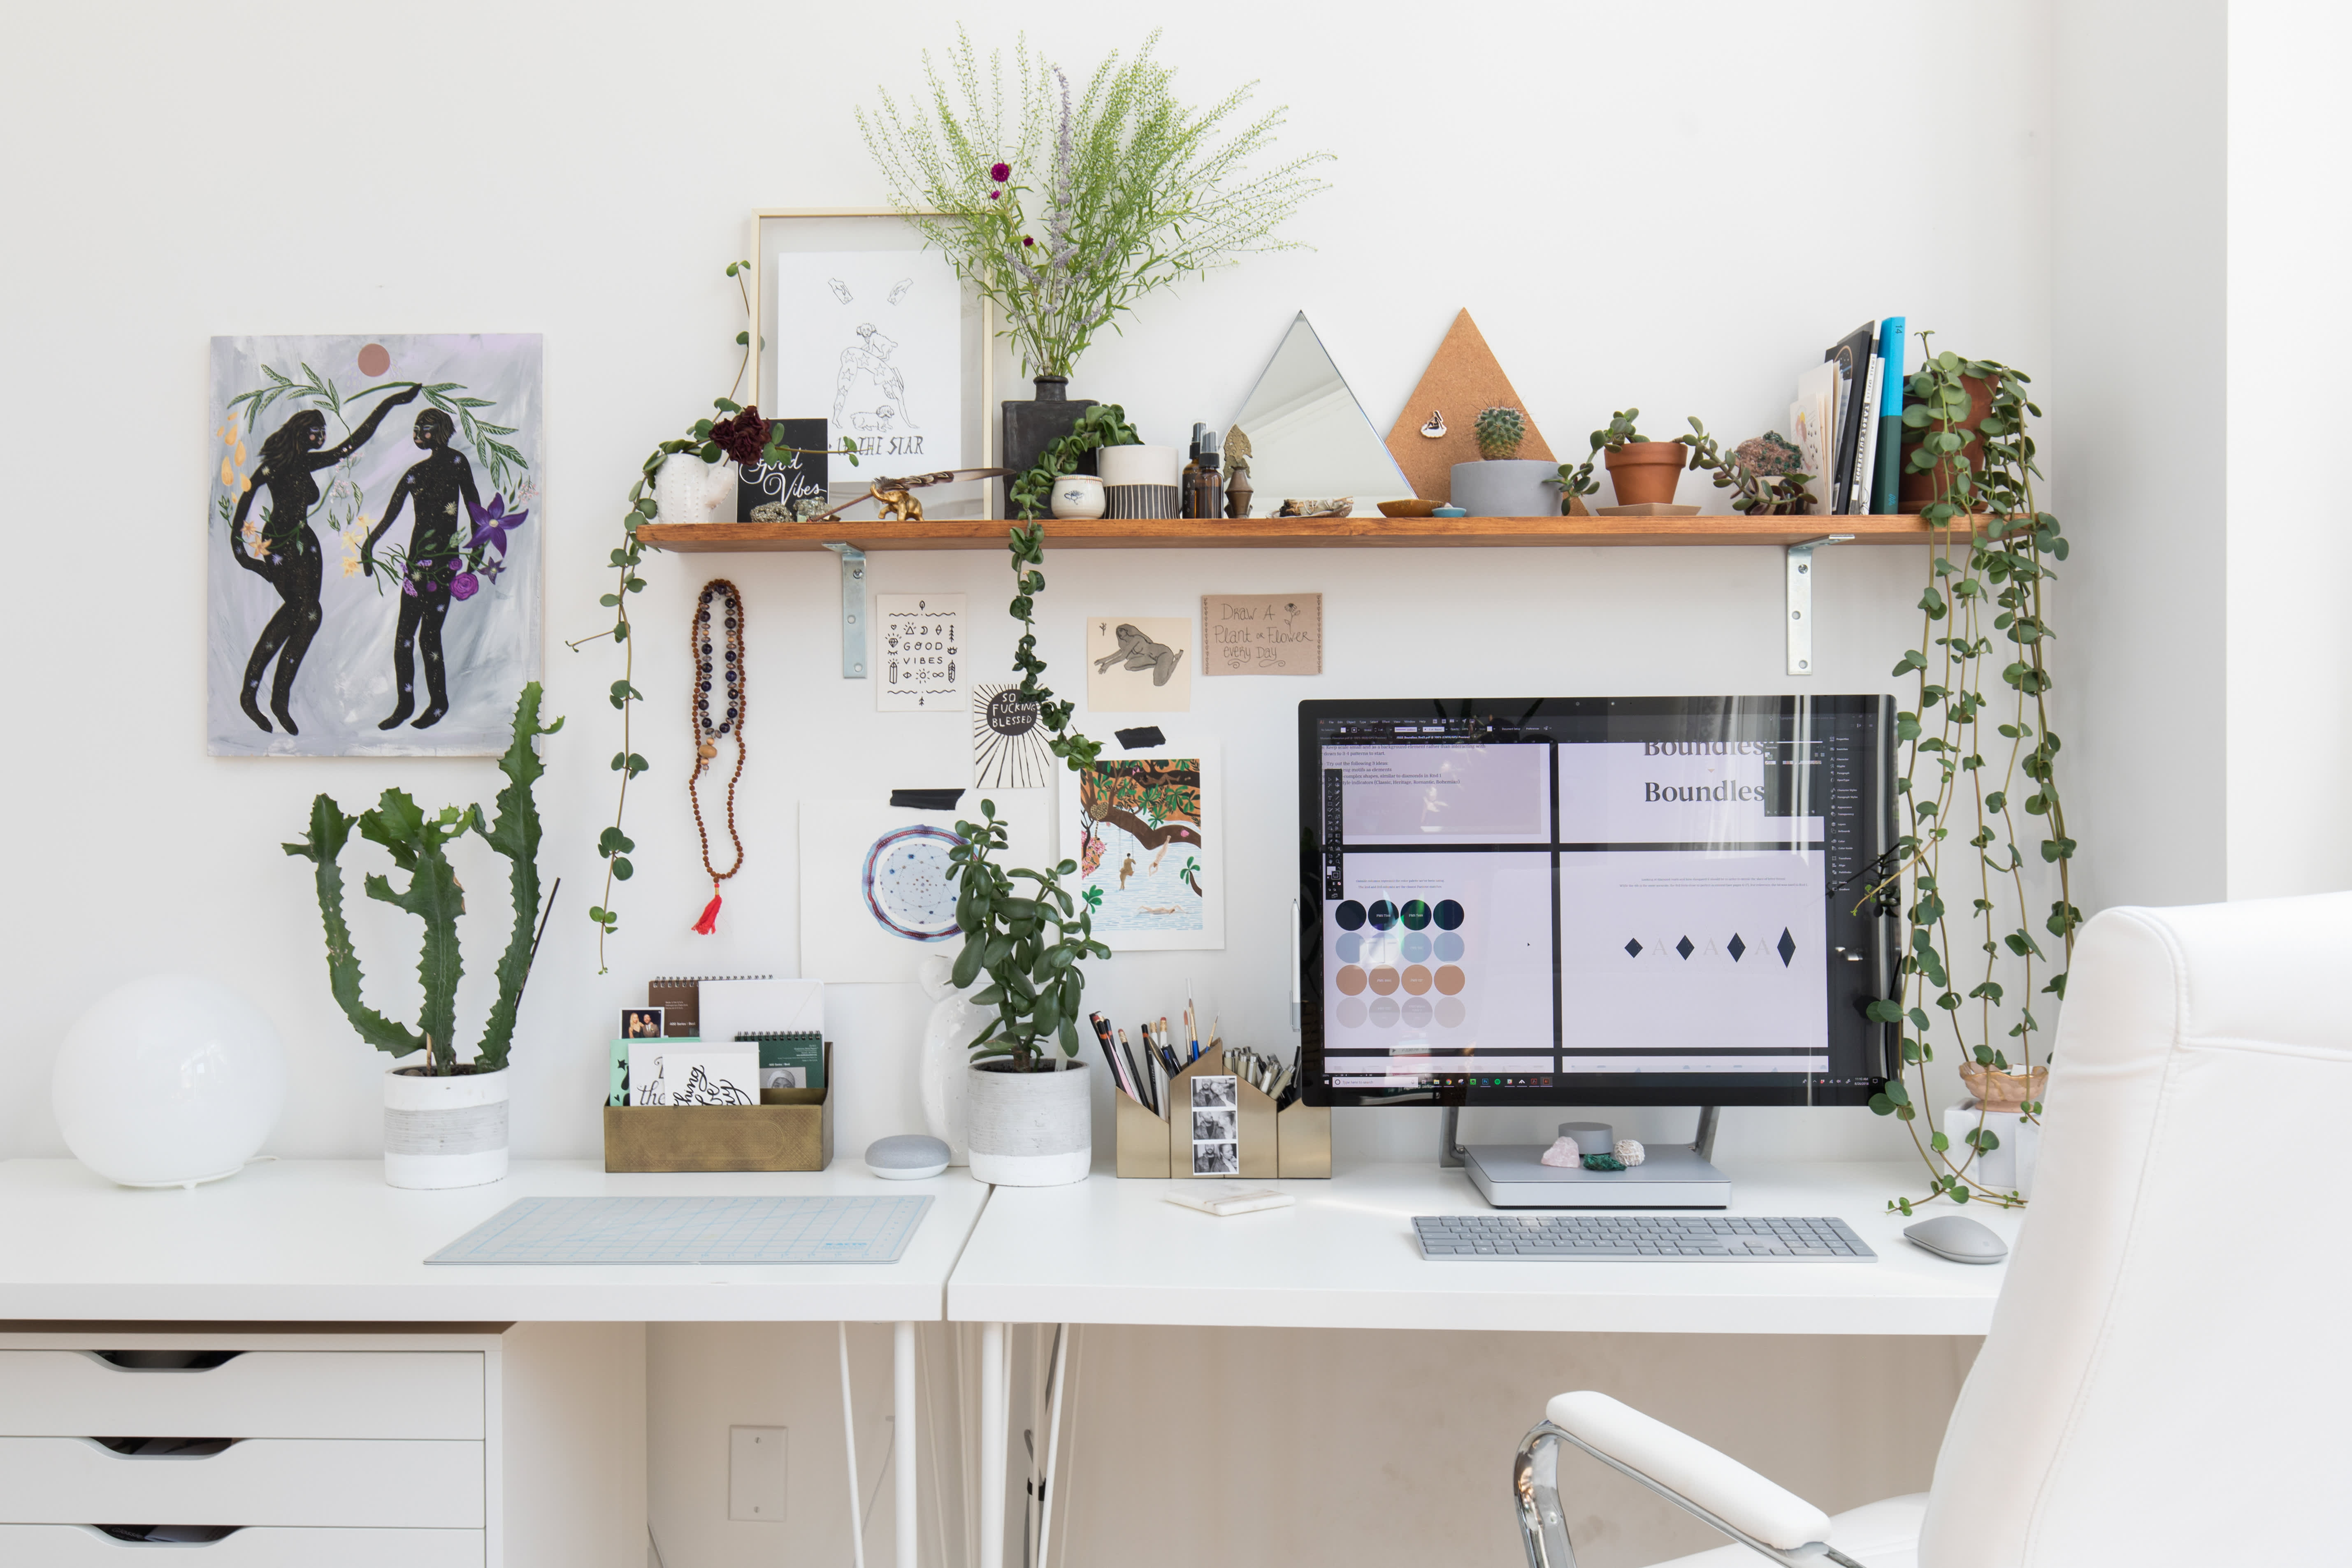 30 Cutest Desk Setups For A Fun Workspace